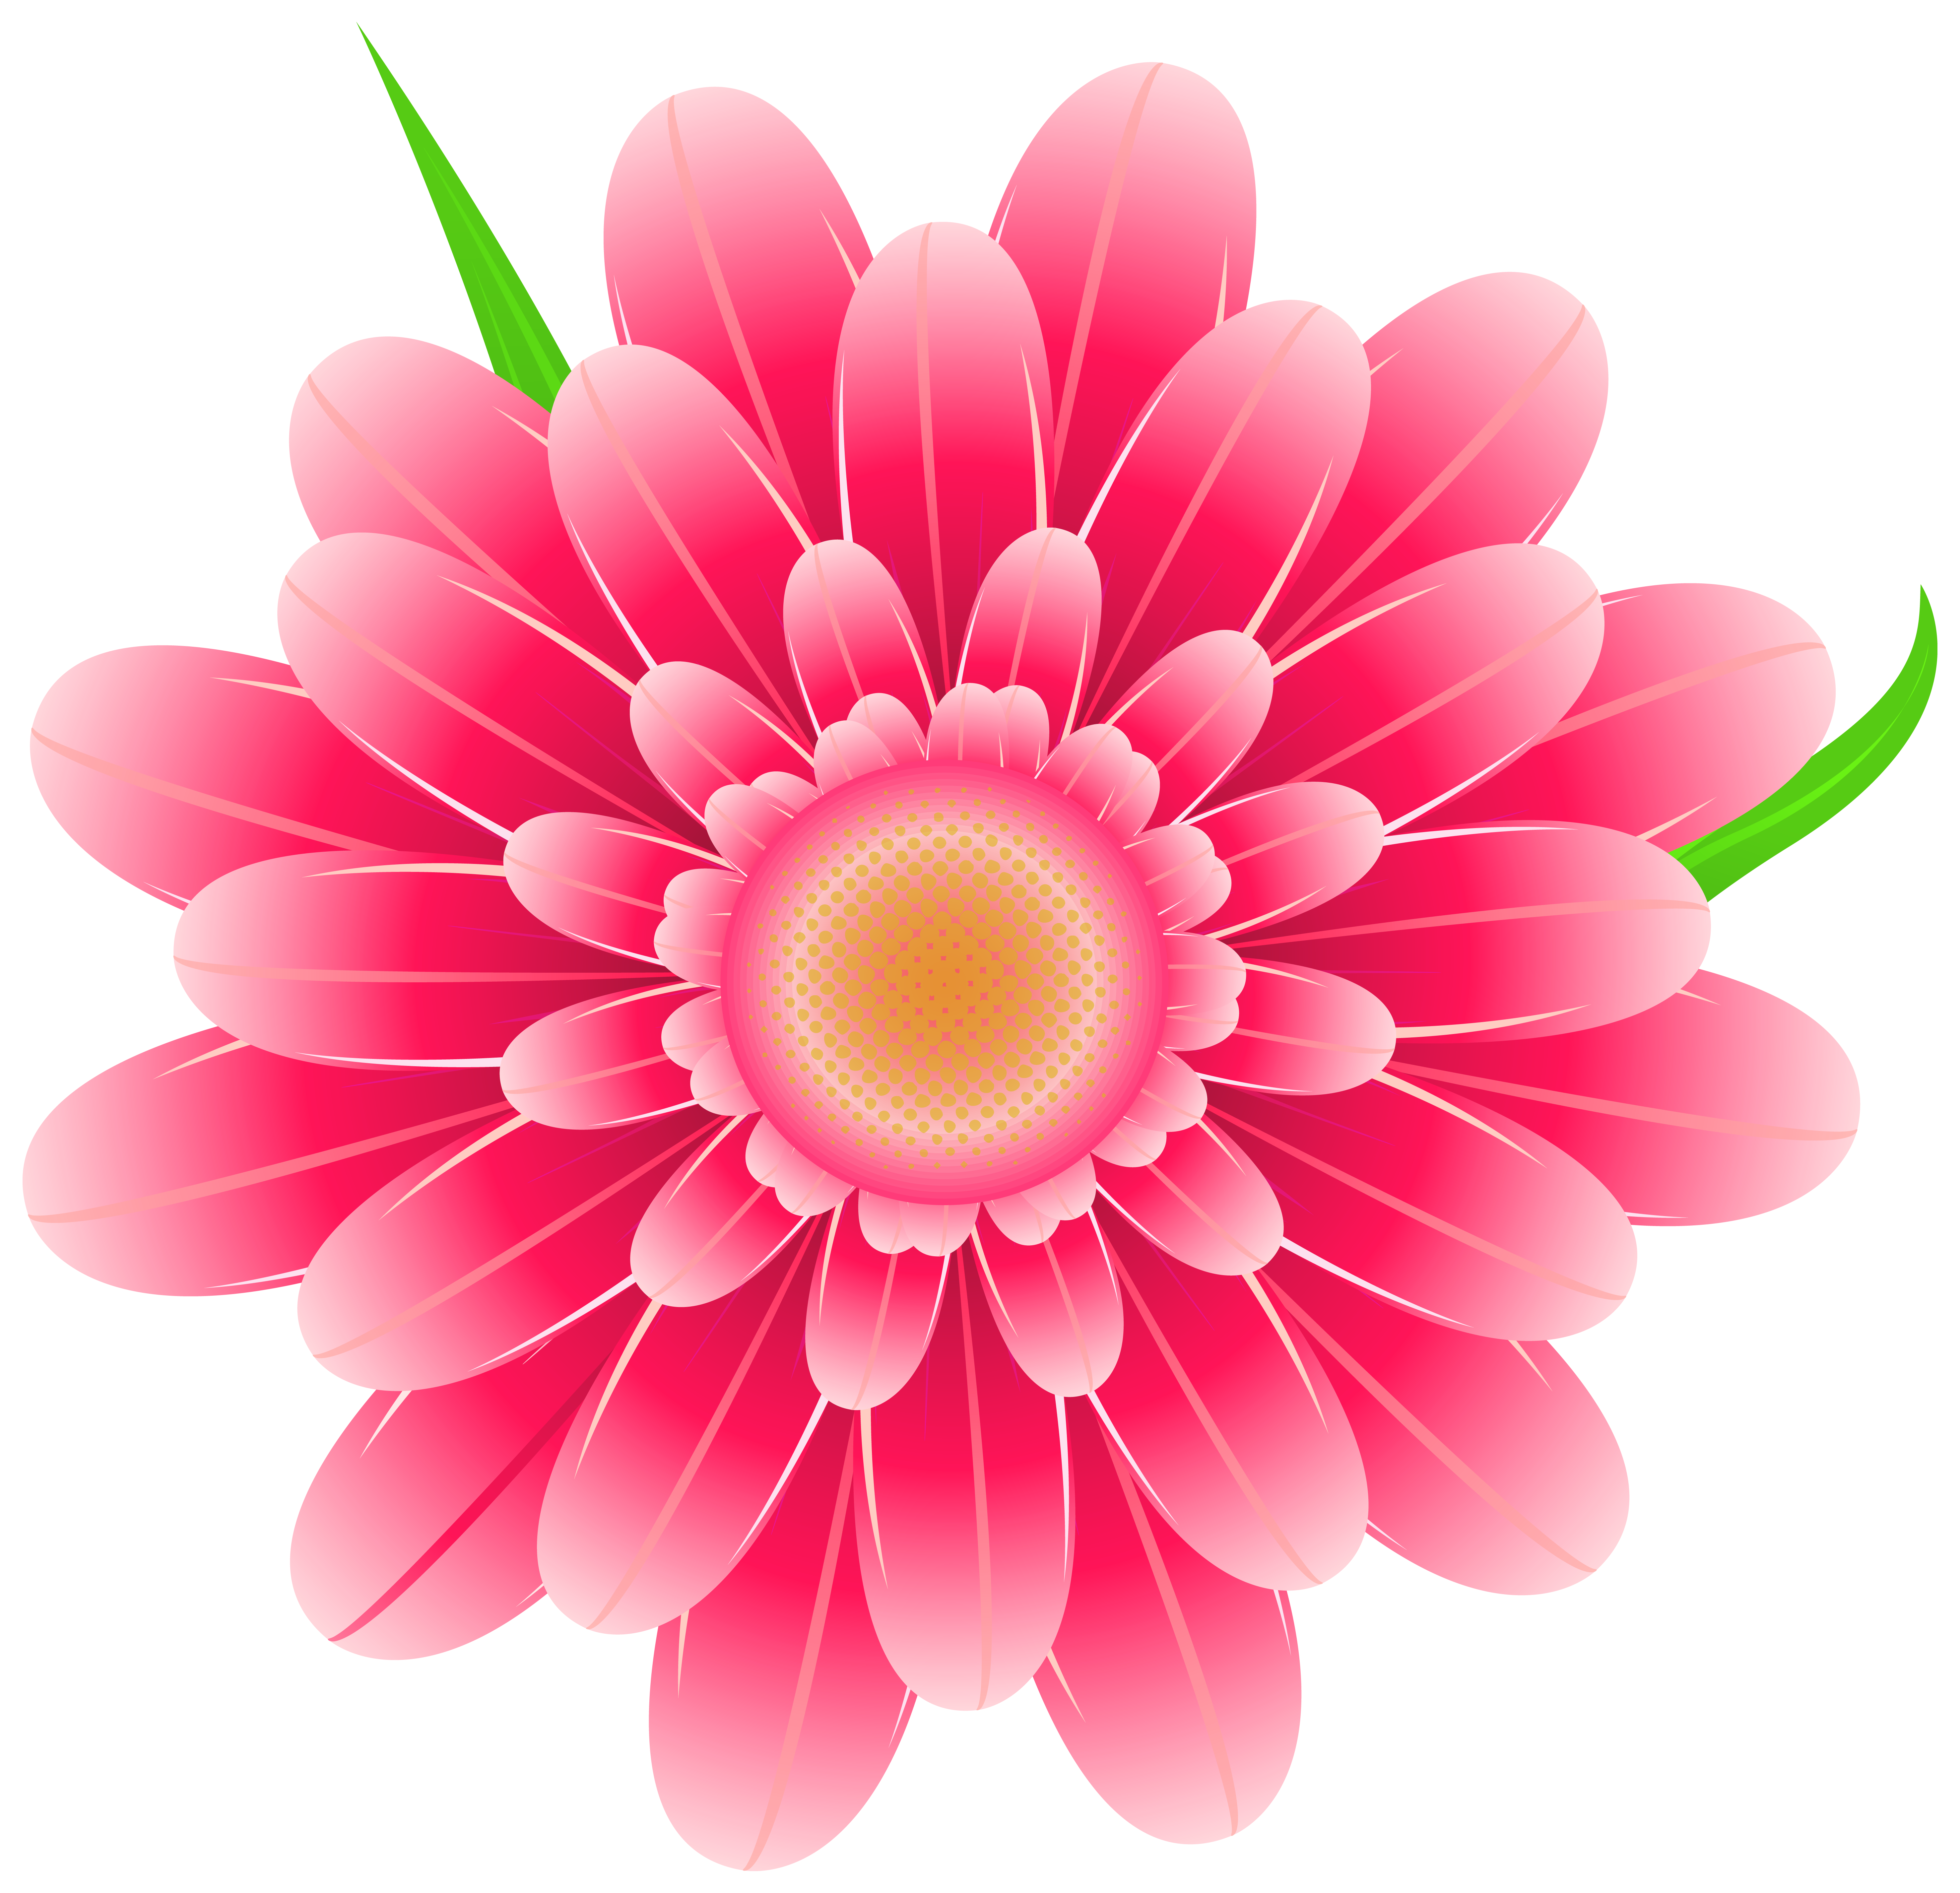 Transparent pink flower.